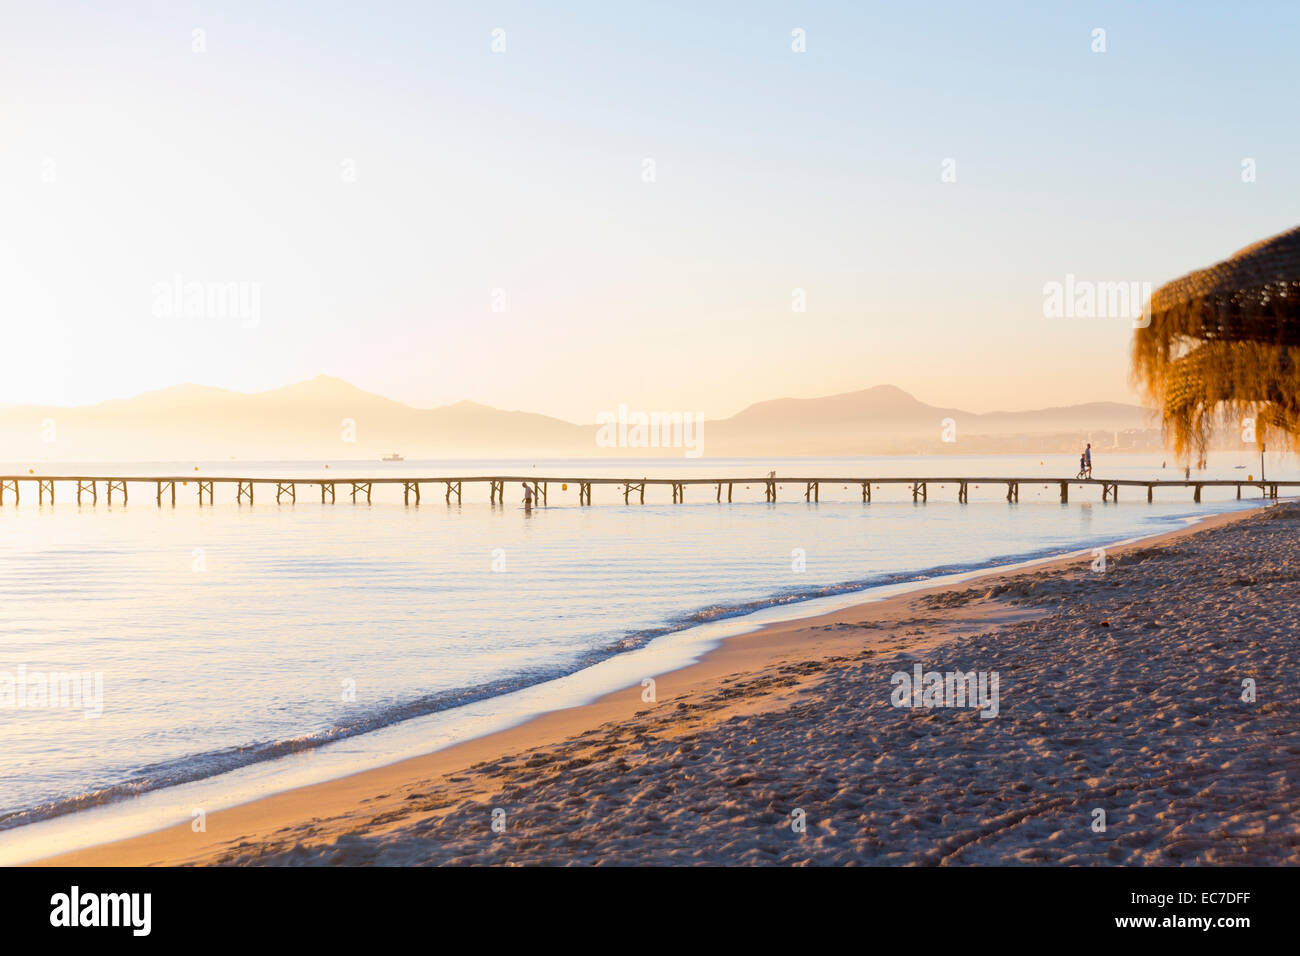 Spain, Balearic Islands, Majorca, wooden footbridge at sunrise Stock Photo